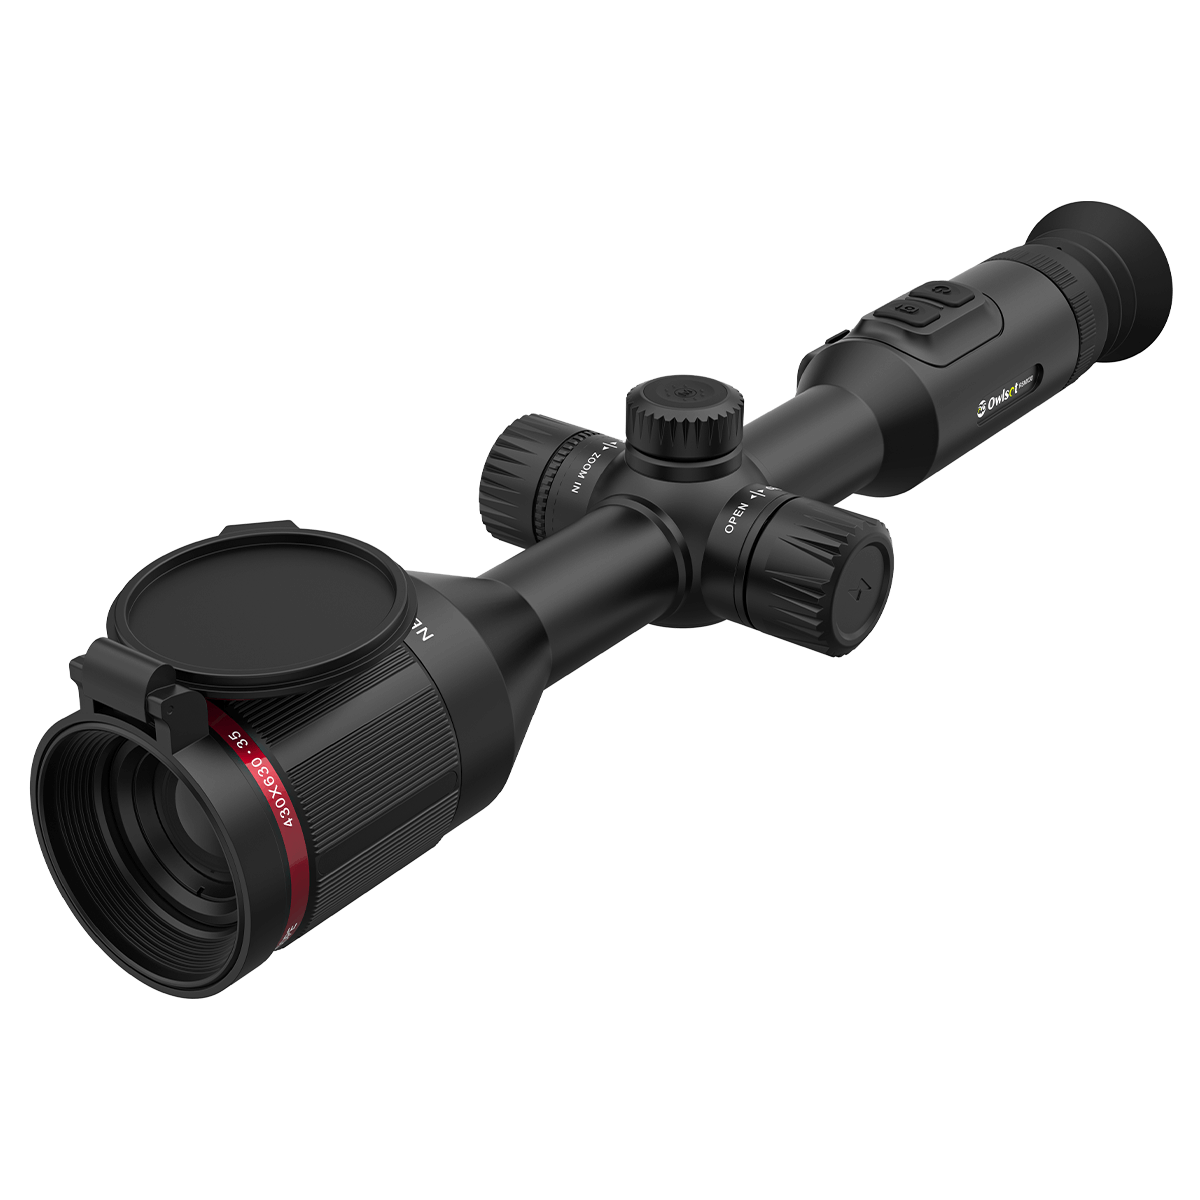 Owlset RSMX30 2-16x35 Thermal Riflescope